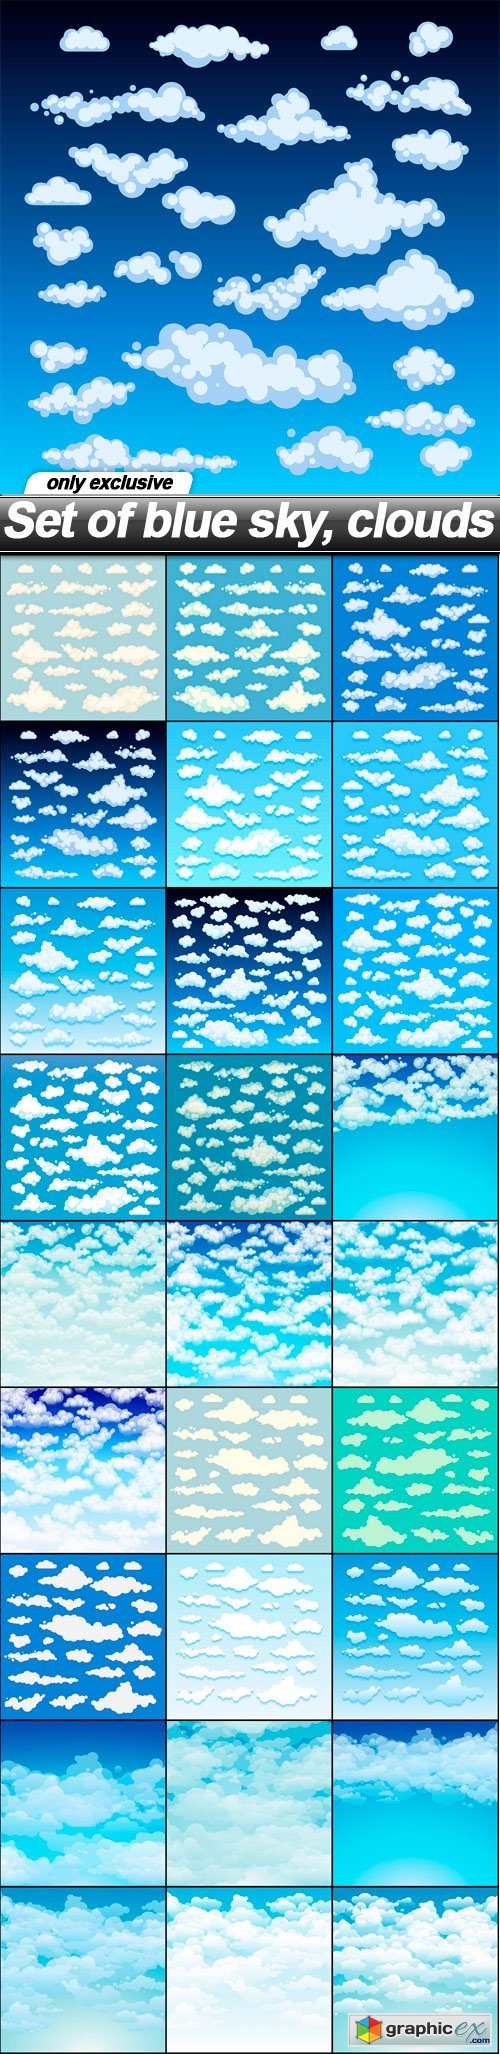 Set of blue sky, clouds - 27 EPS